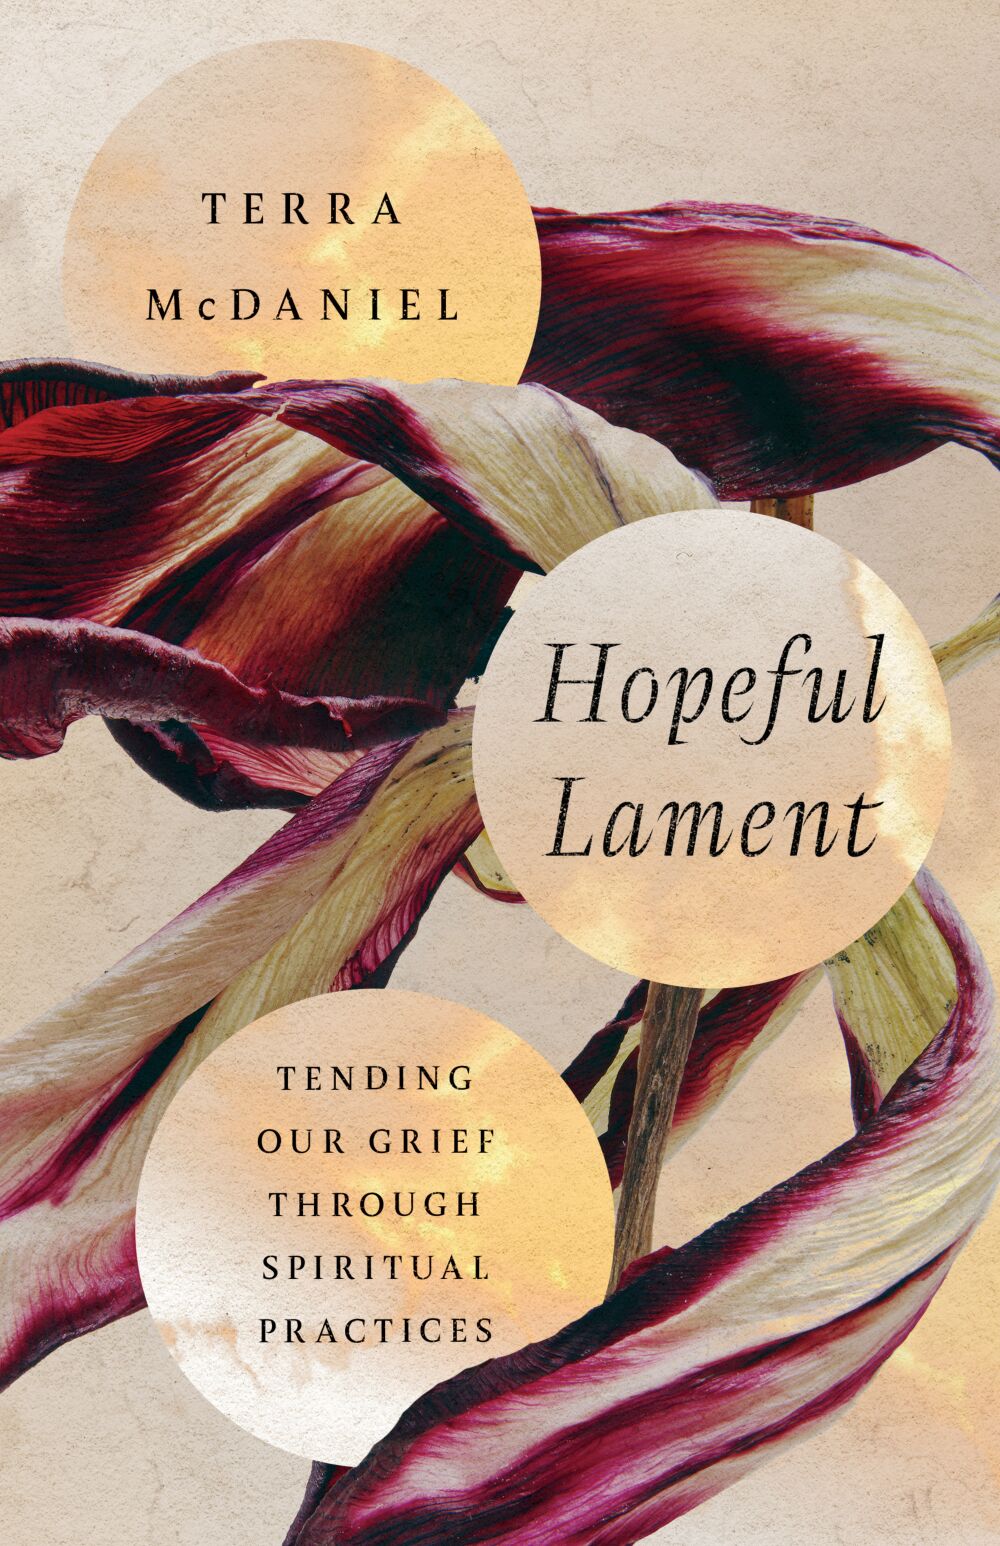 Hopeful Lament by Terra McDaniel